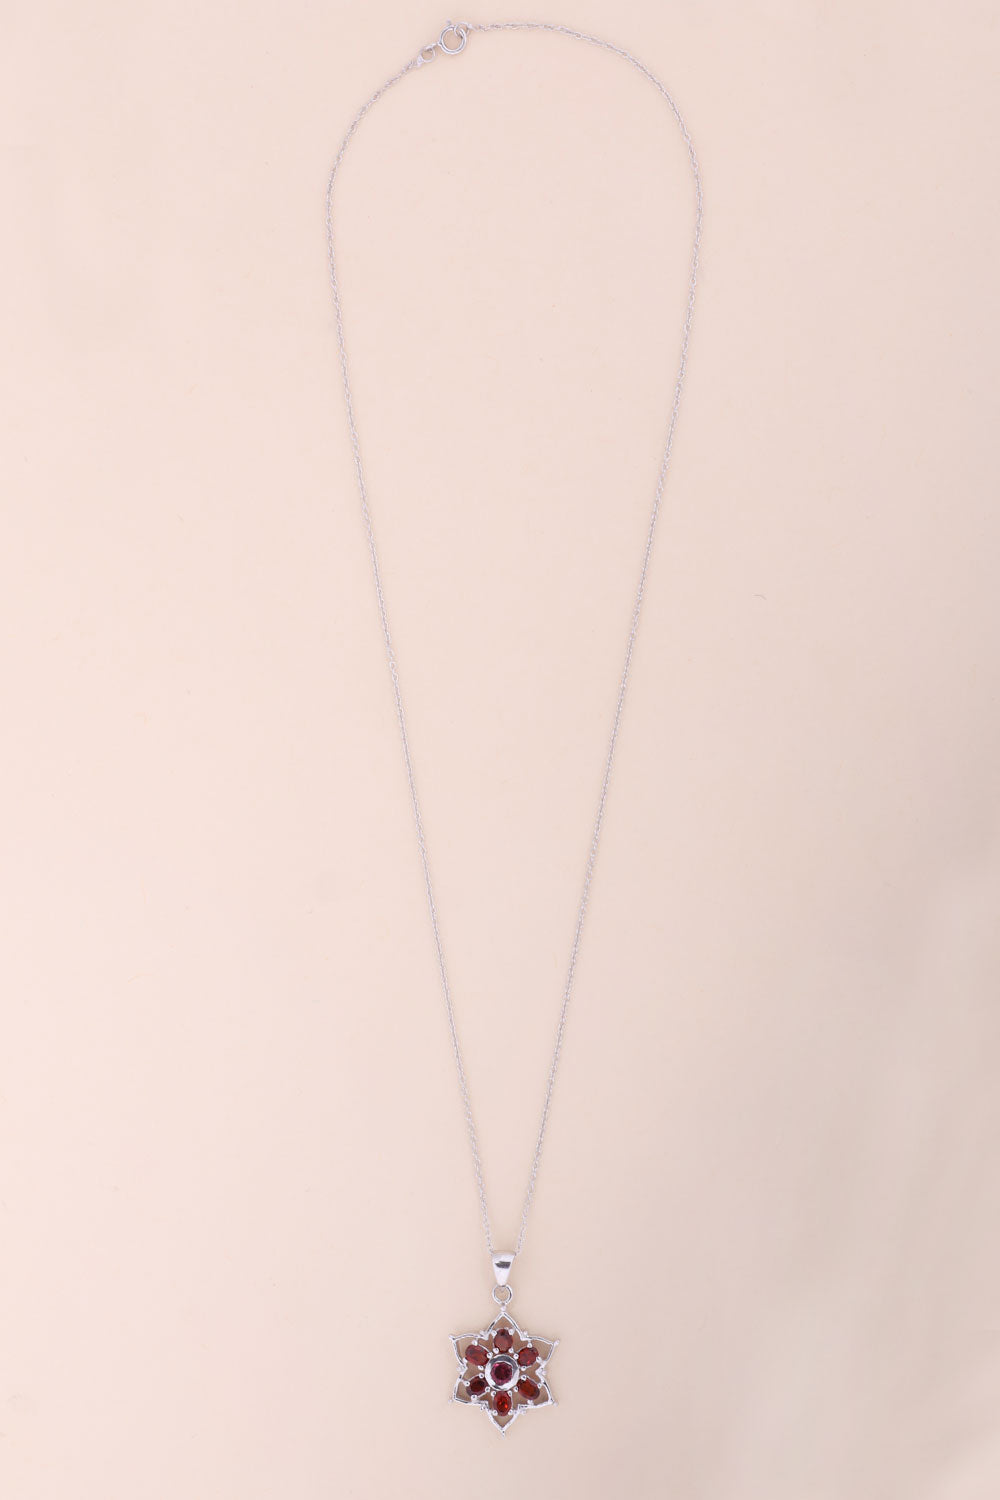 Pink Tourmaline Sterling Silver Necklace Pendant Chain - Avishya